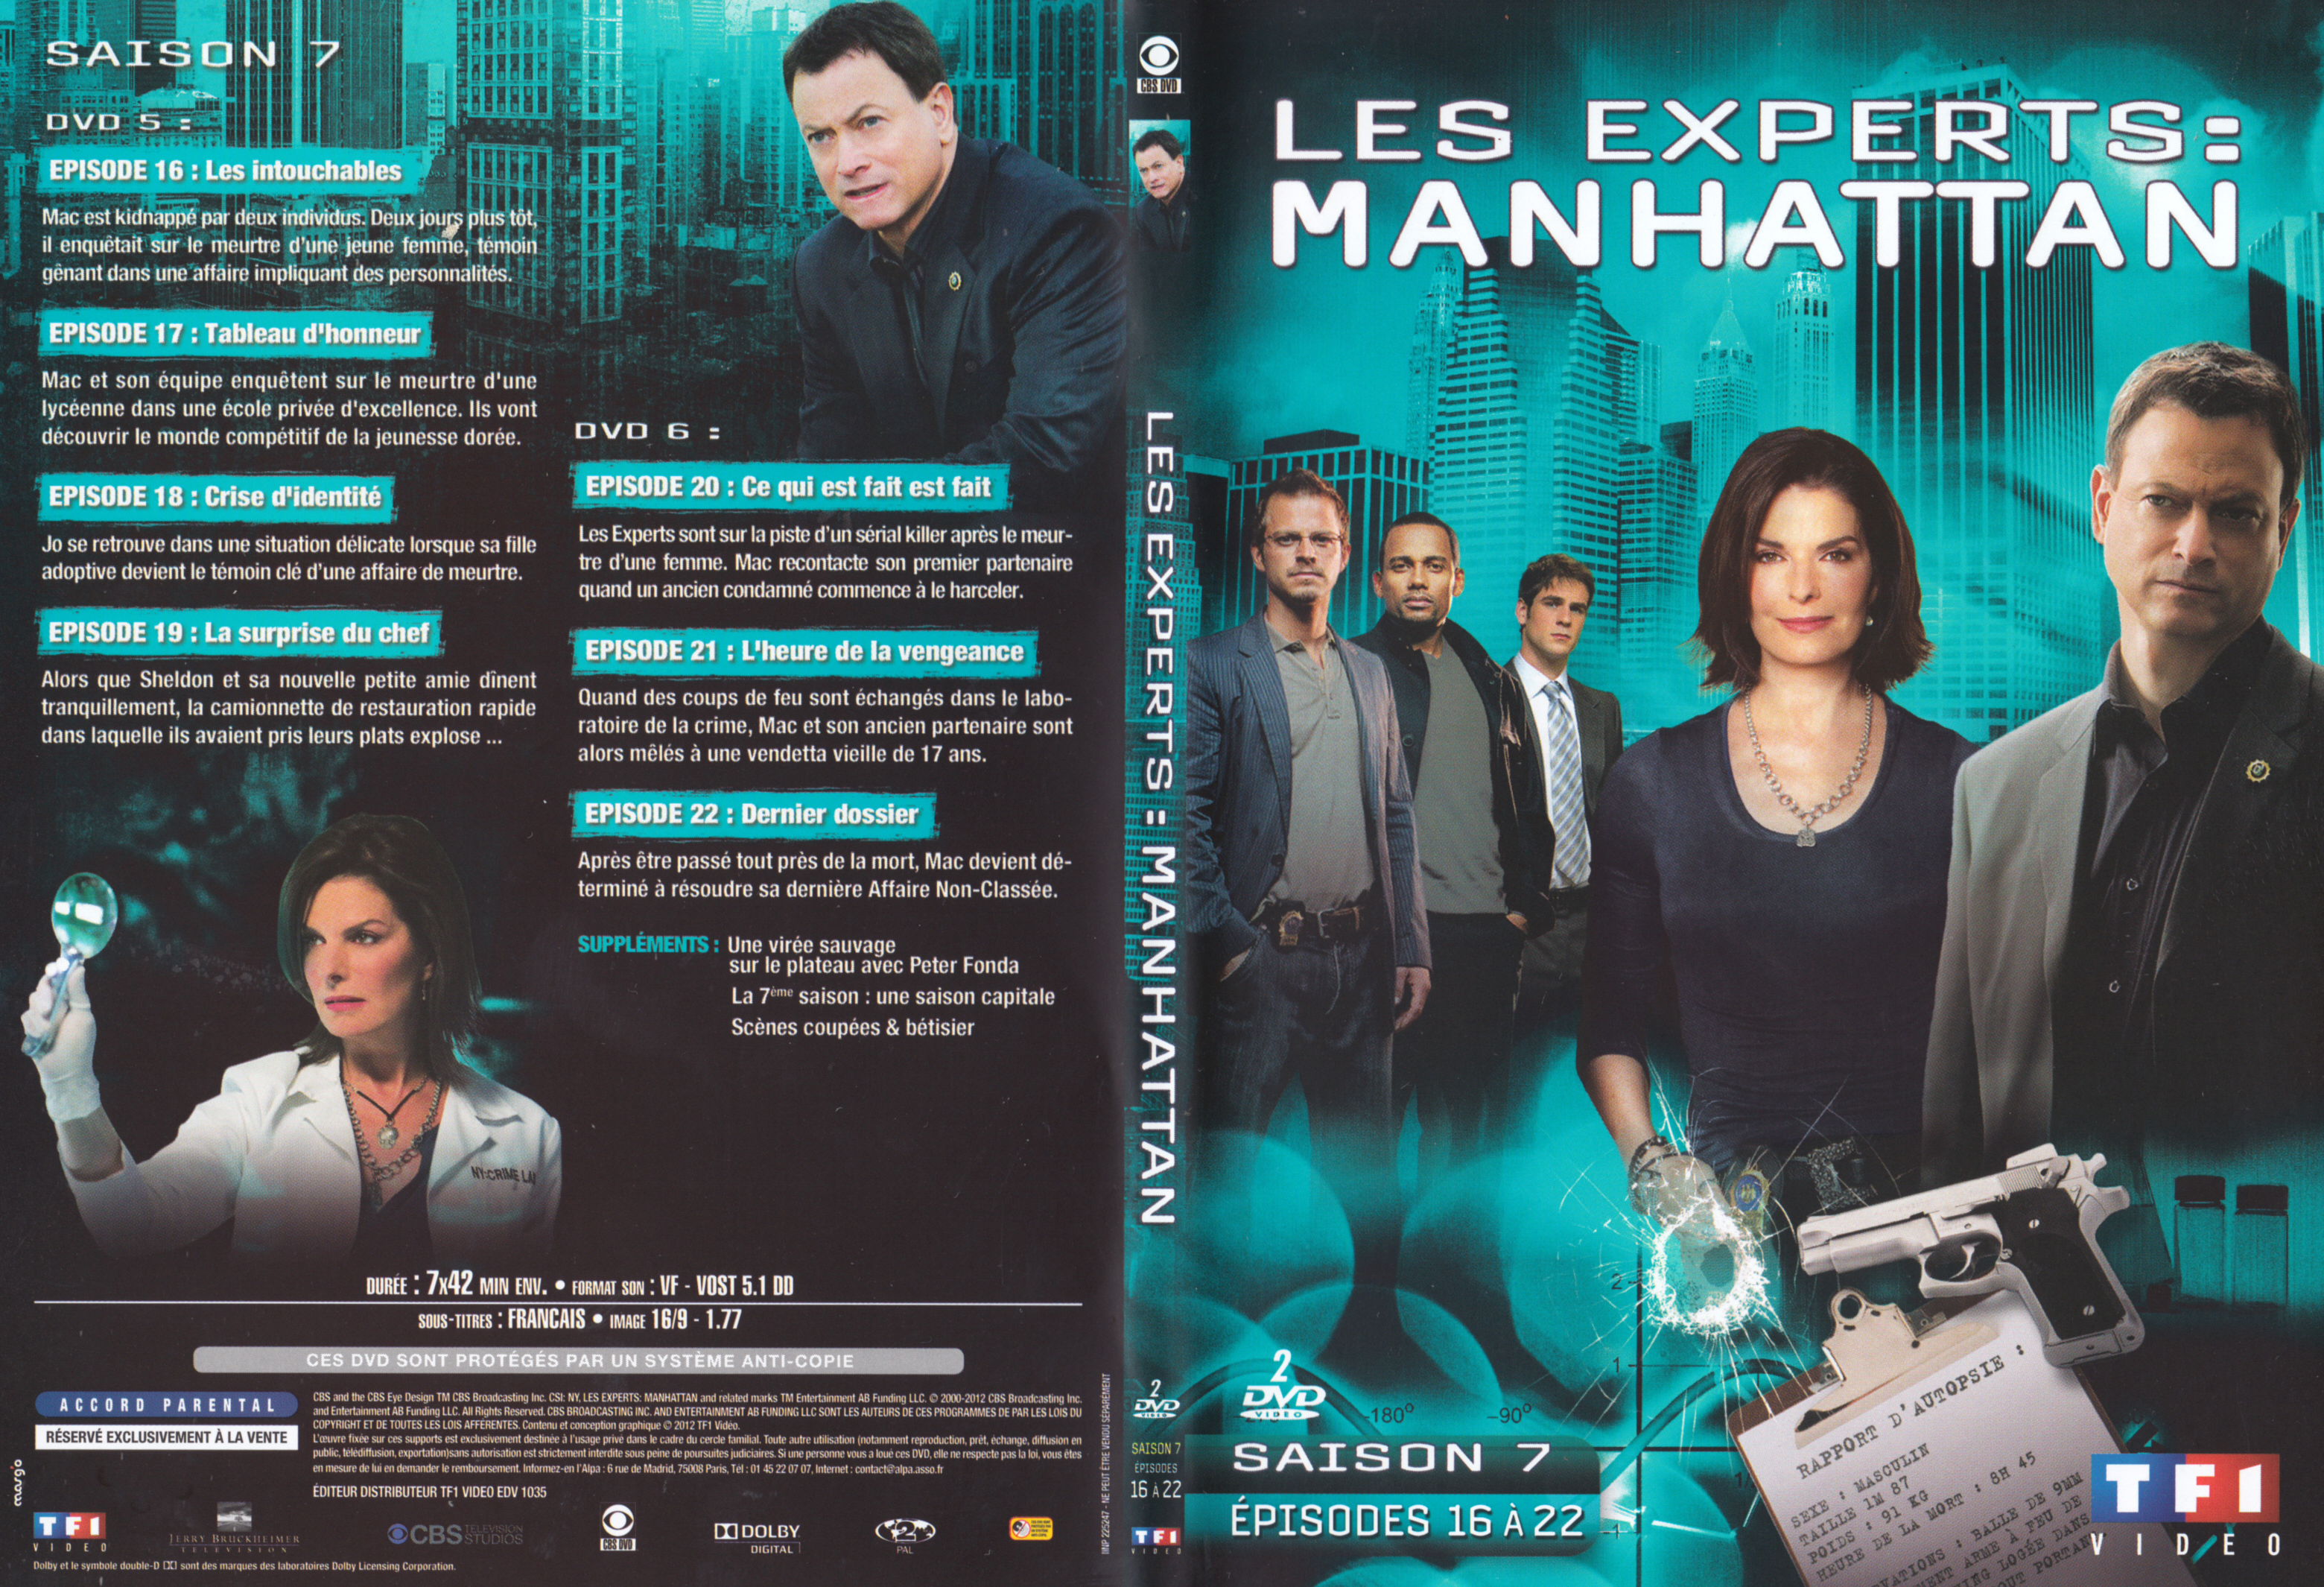 Jaquette DVD Les Experts Manhattan Saison 7 DVD 3